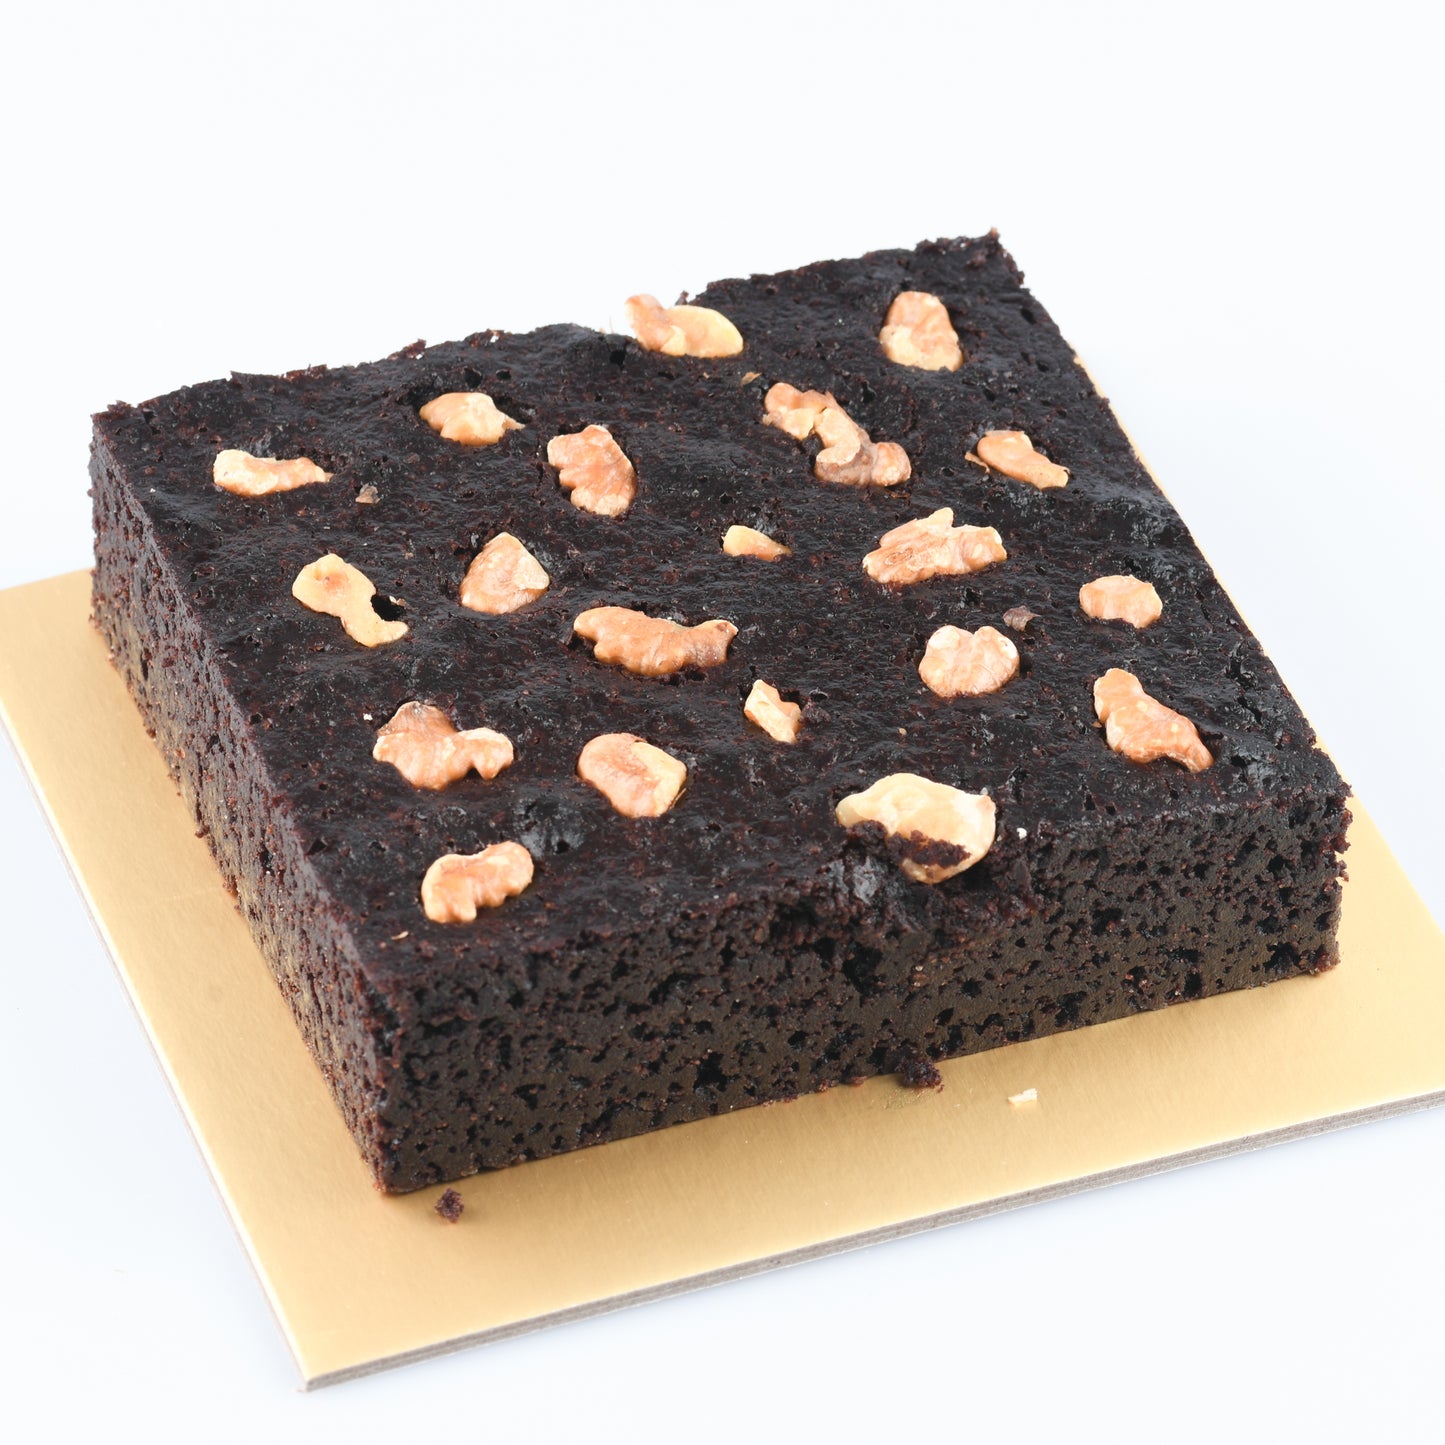 Sugar Free | Keto Friendly | Low Carb | Gluten free | Brownie 11x11 cm | $18.80 nett